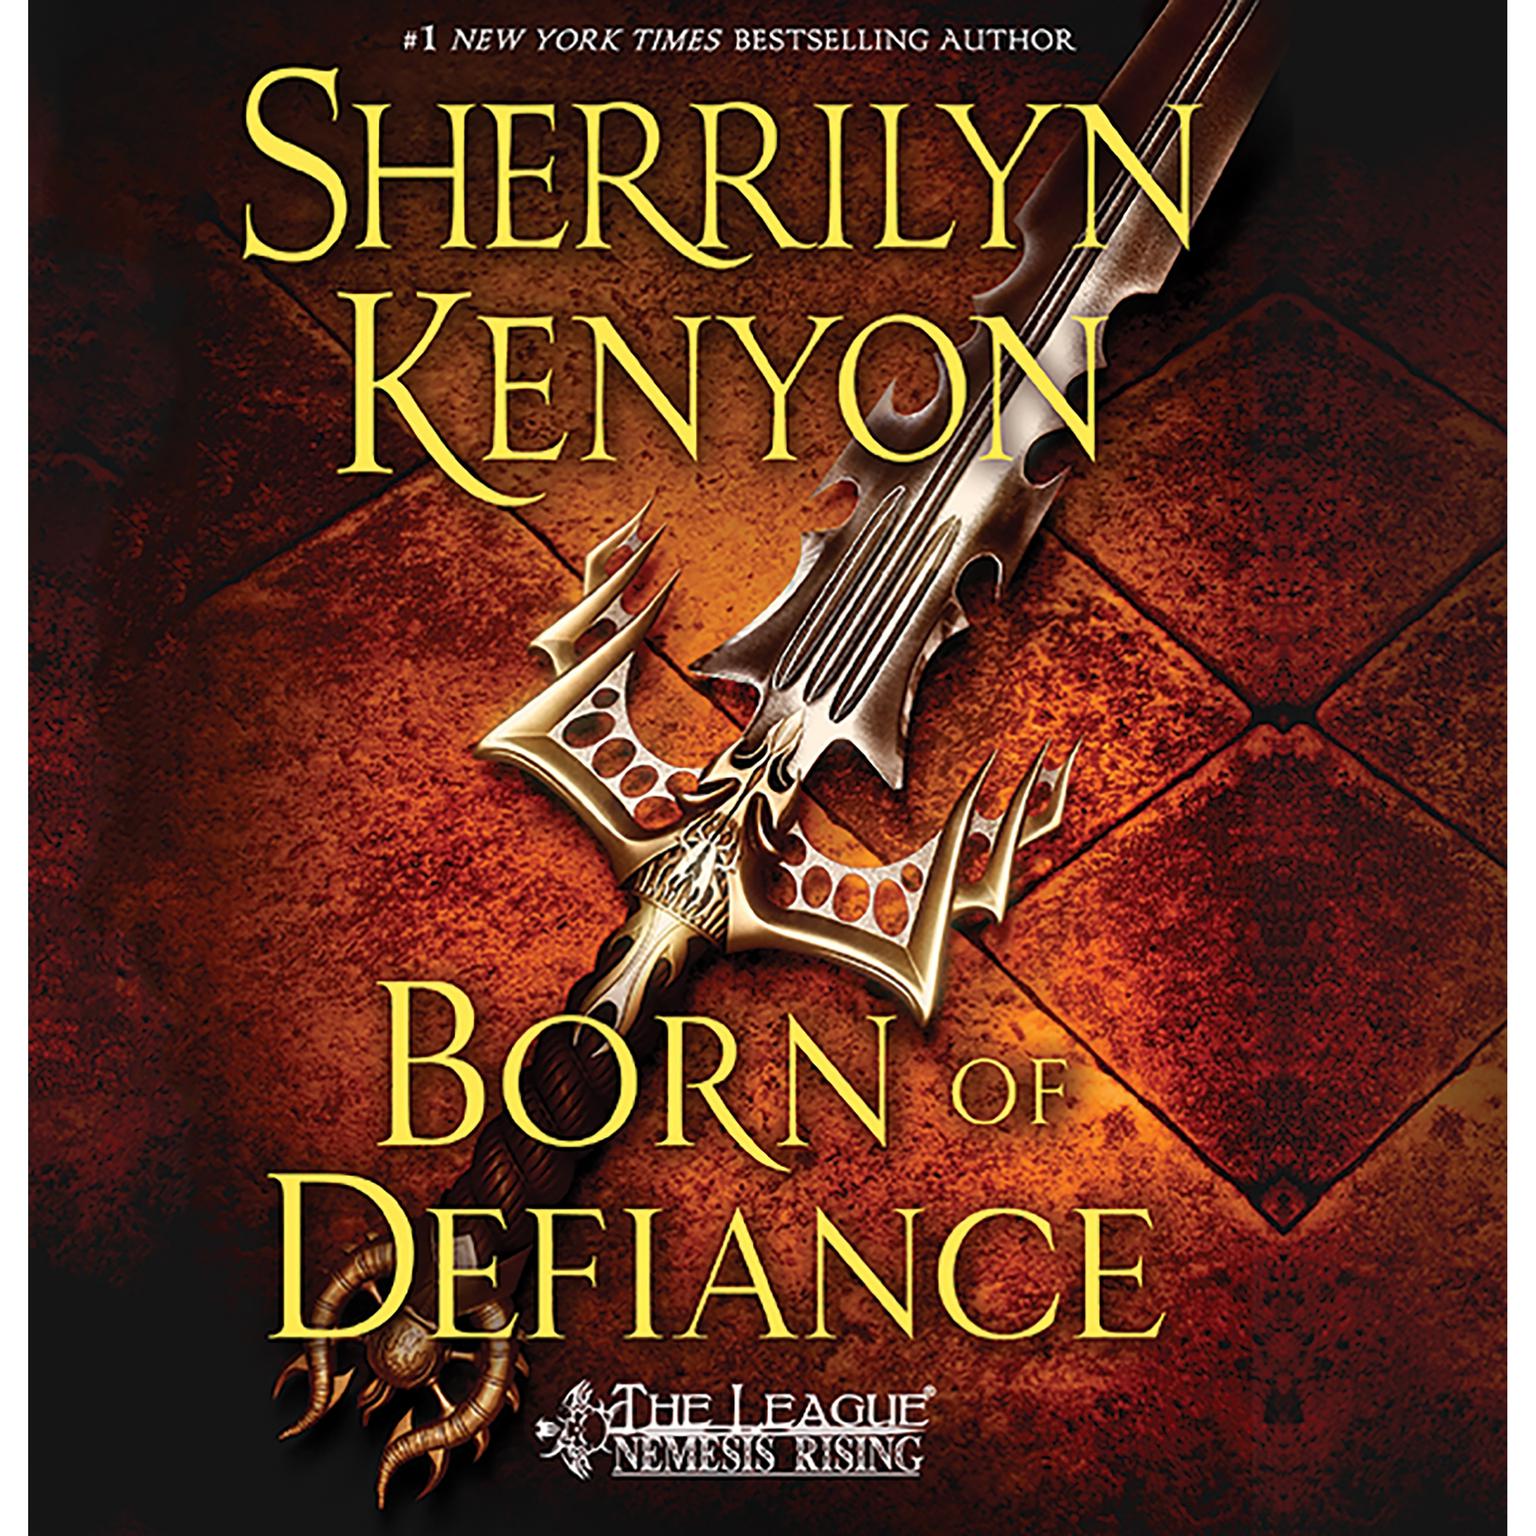 Born of Defiance: The League: Nemesis Rising Audiobook, by Sherrilyn Kenyon